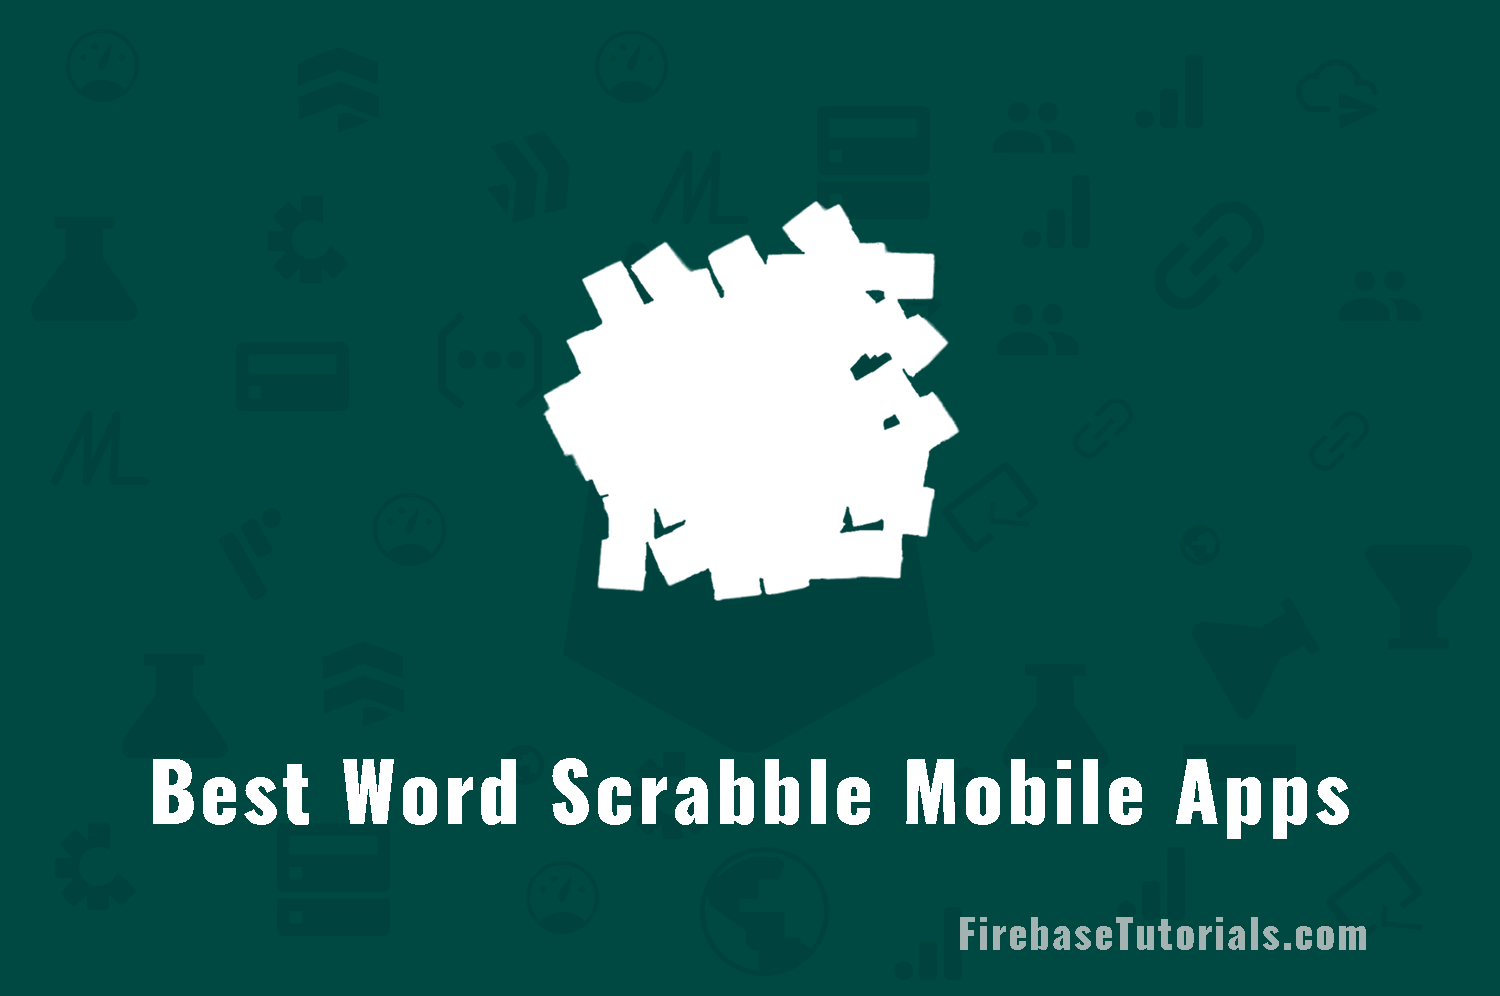 Best 5 Word Scrabble Mobile Games in 2020